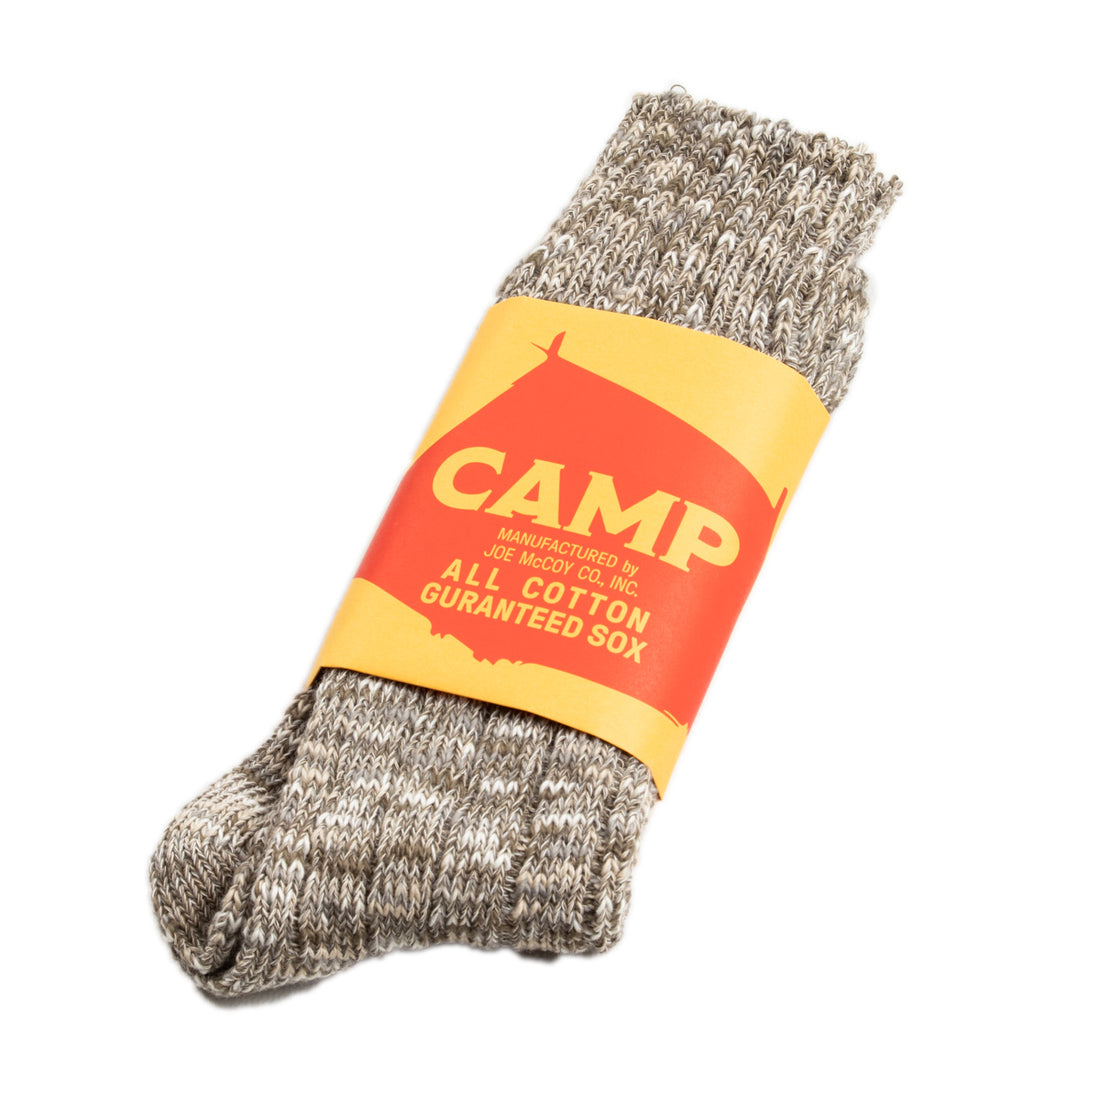 The Real McCoy's Outdoor Socks "Camp" - O. Khaki - Standard & Strange